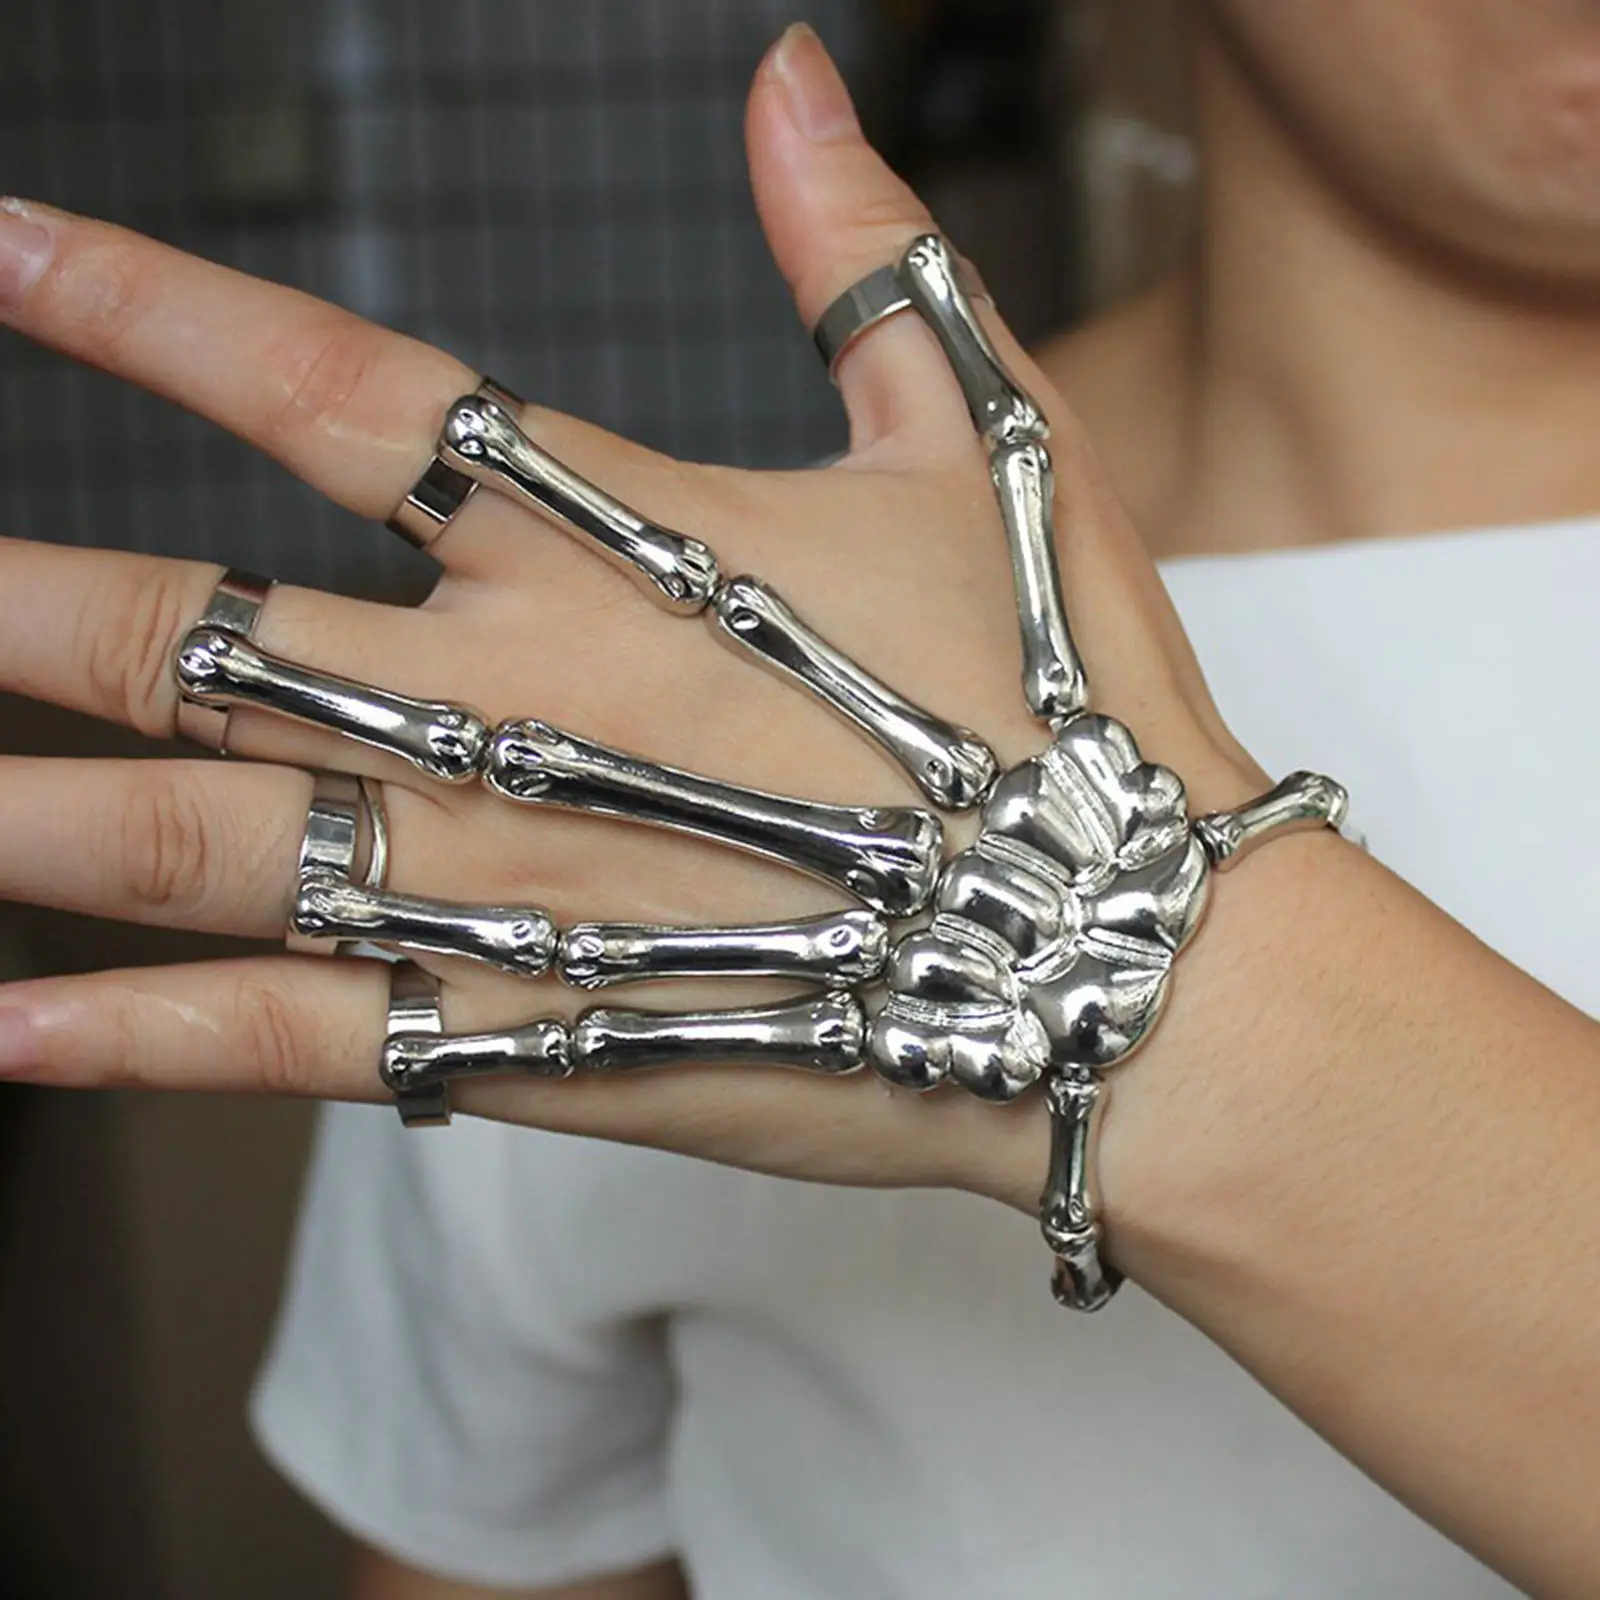 Skeleton Hand Bracelet with Rings Elasticity Wristband Skeleton Bangles for Party